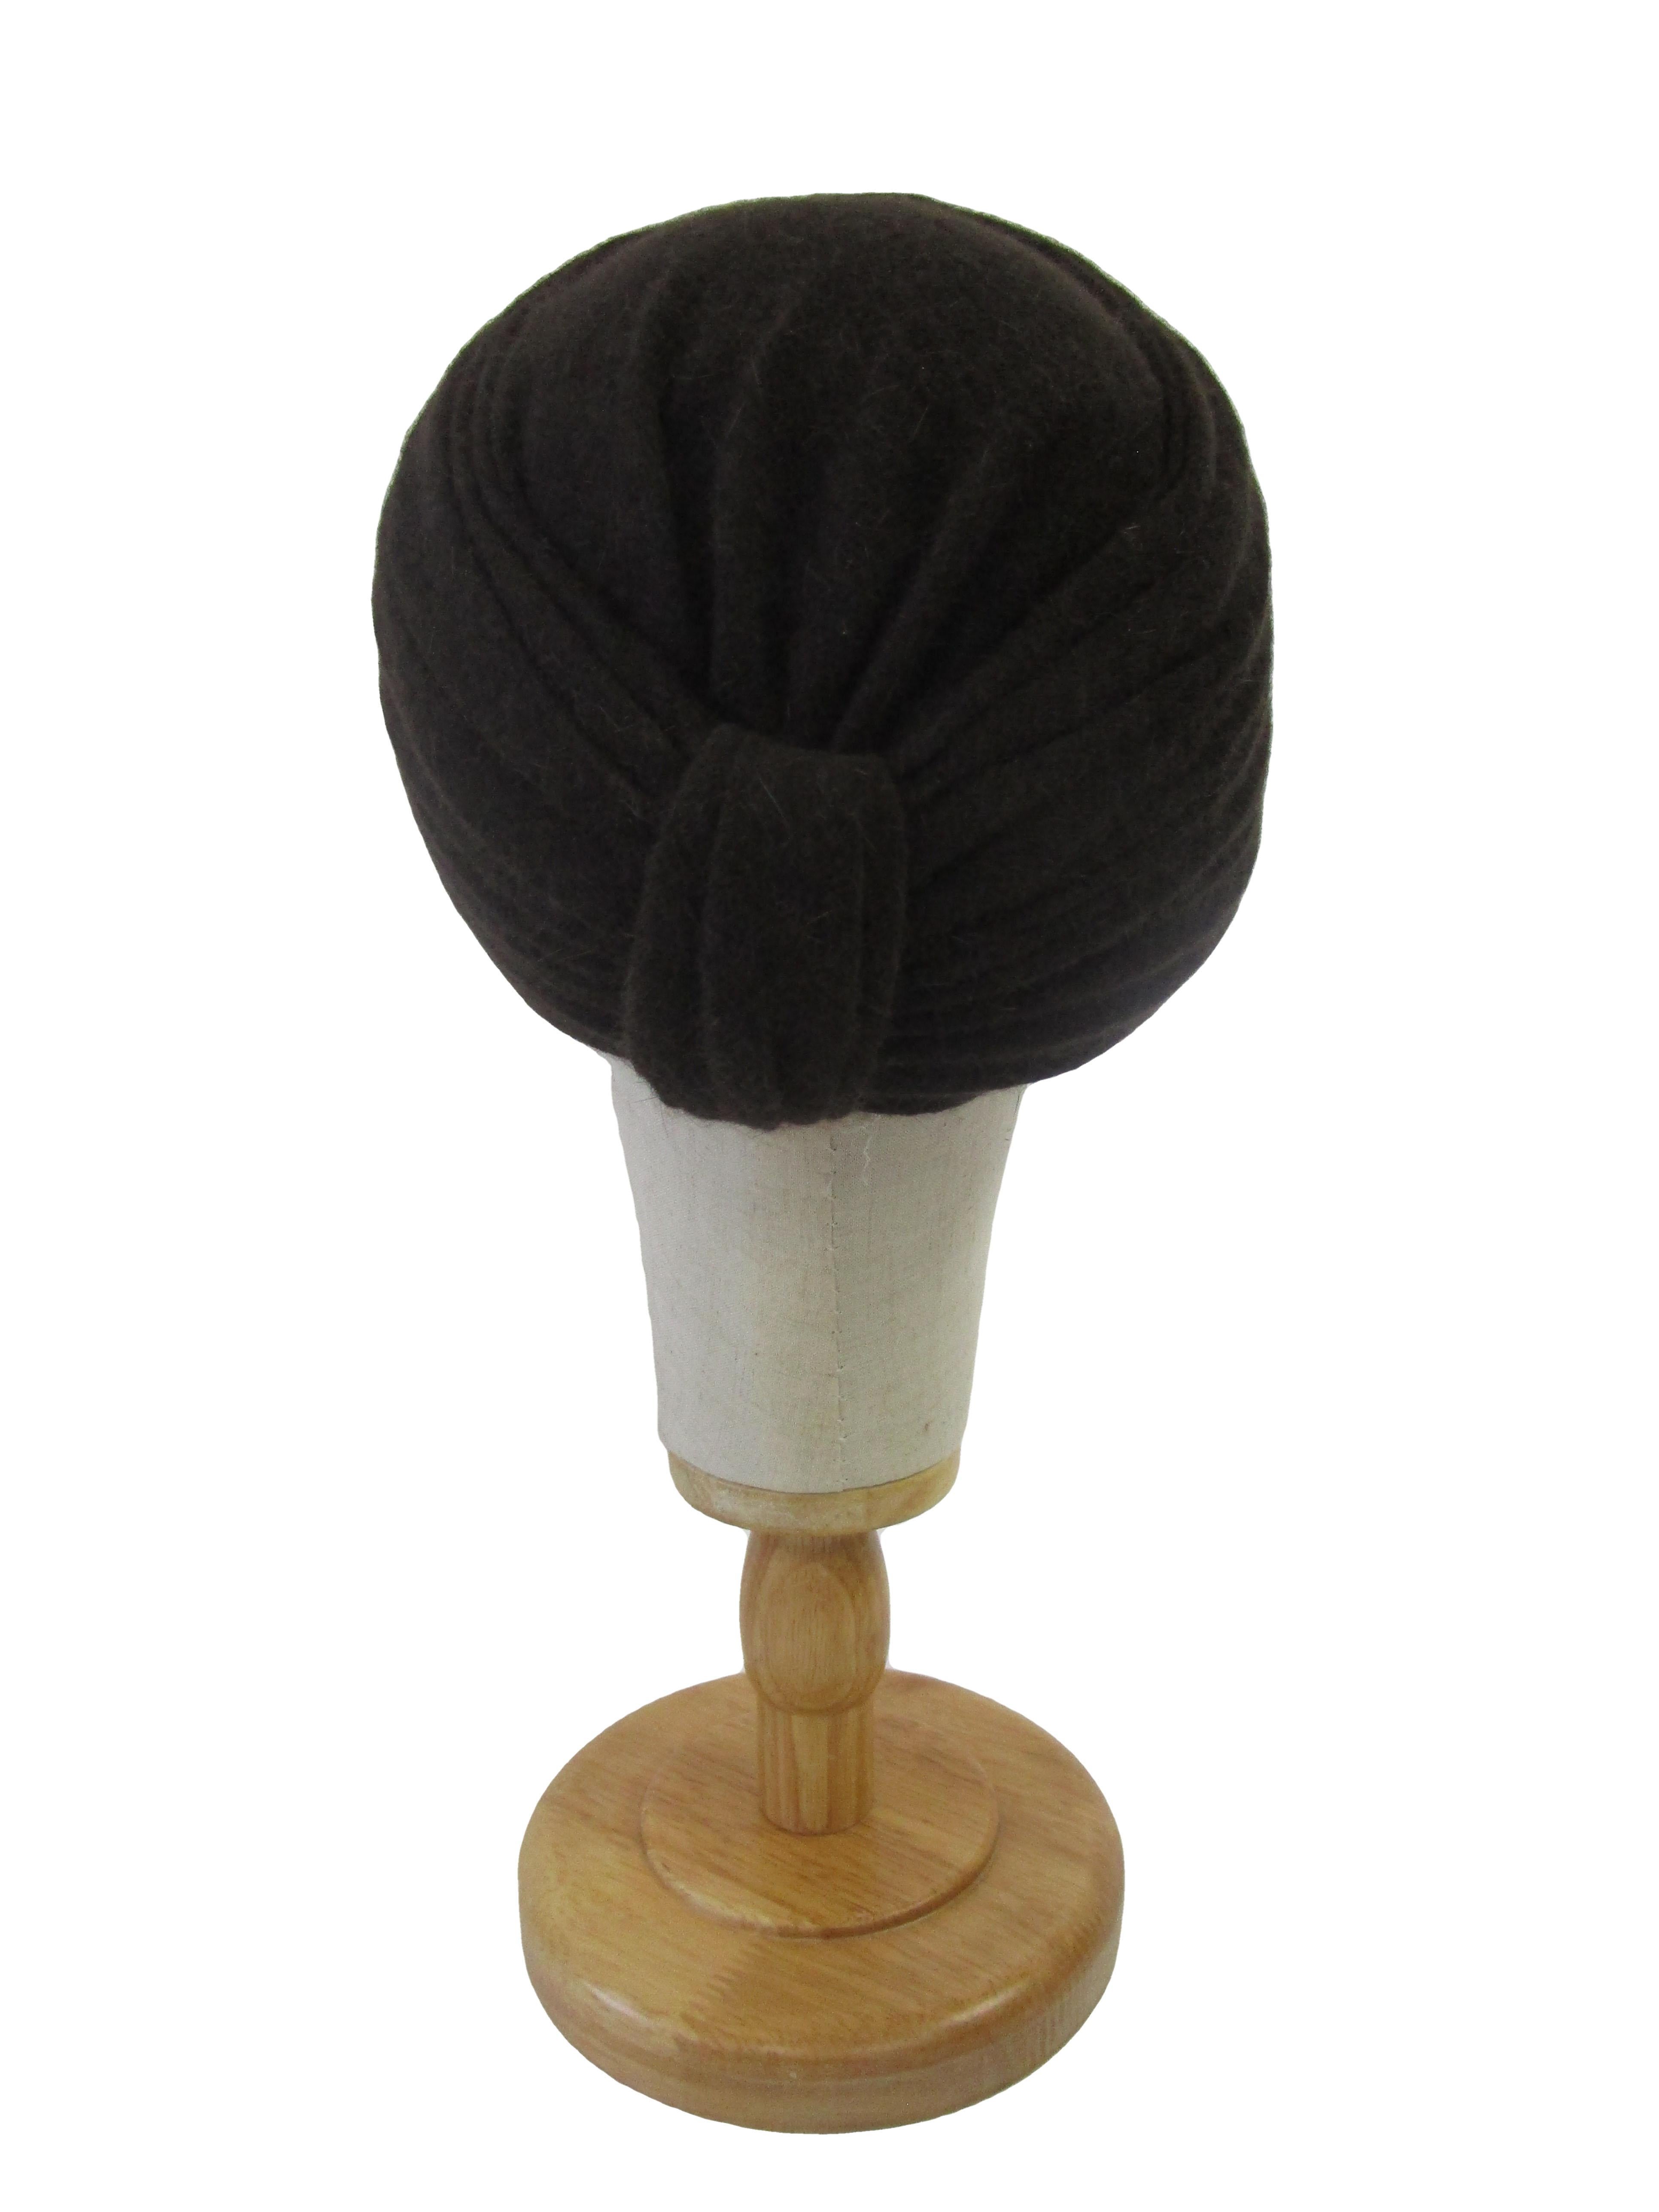 1970s turban